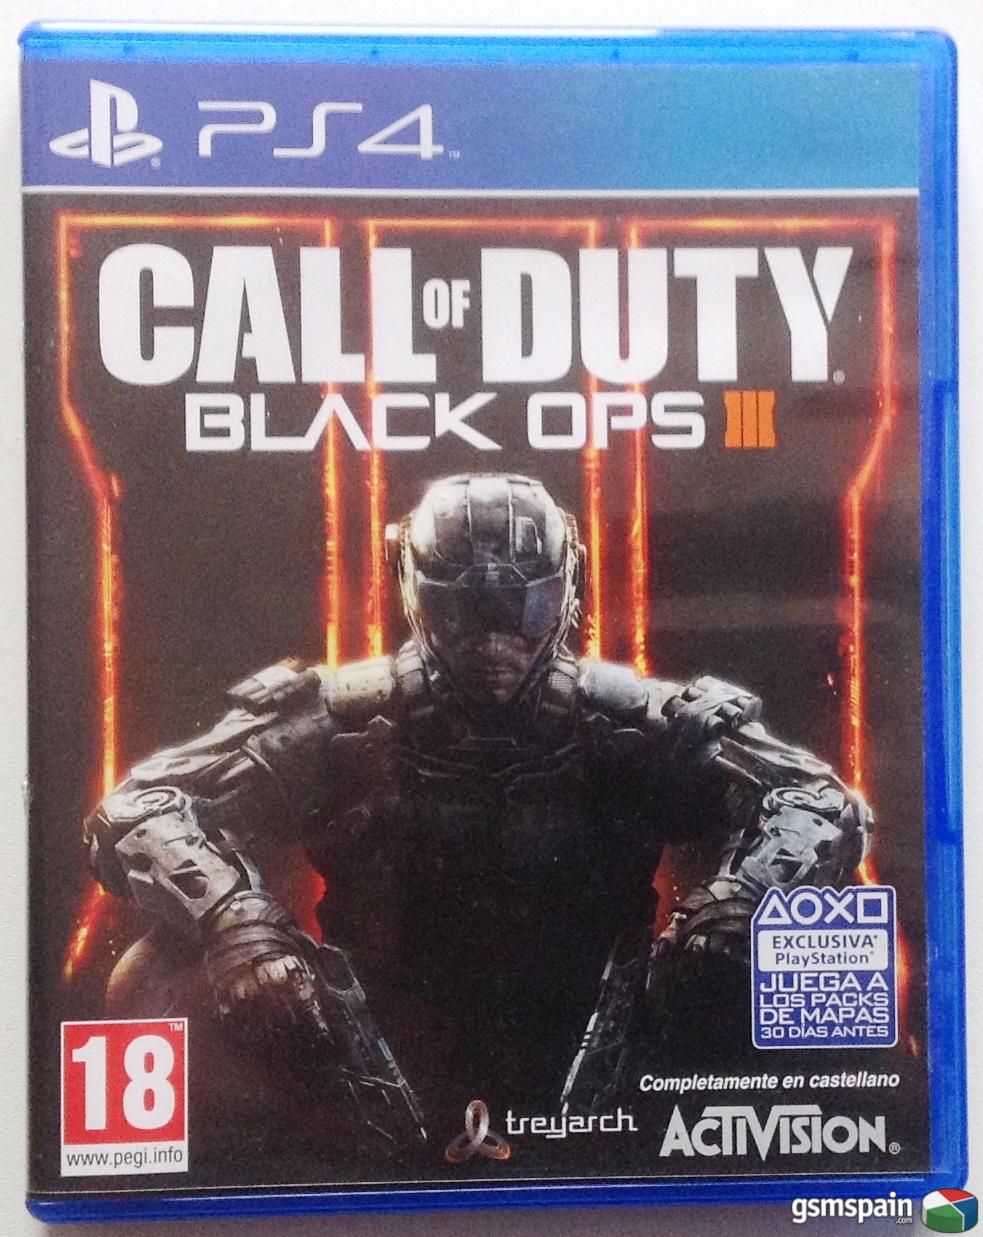 [VENDO] Call of Duty Blakc Ops III para PS4.